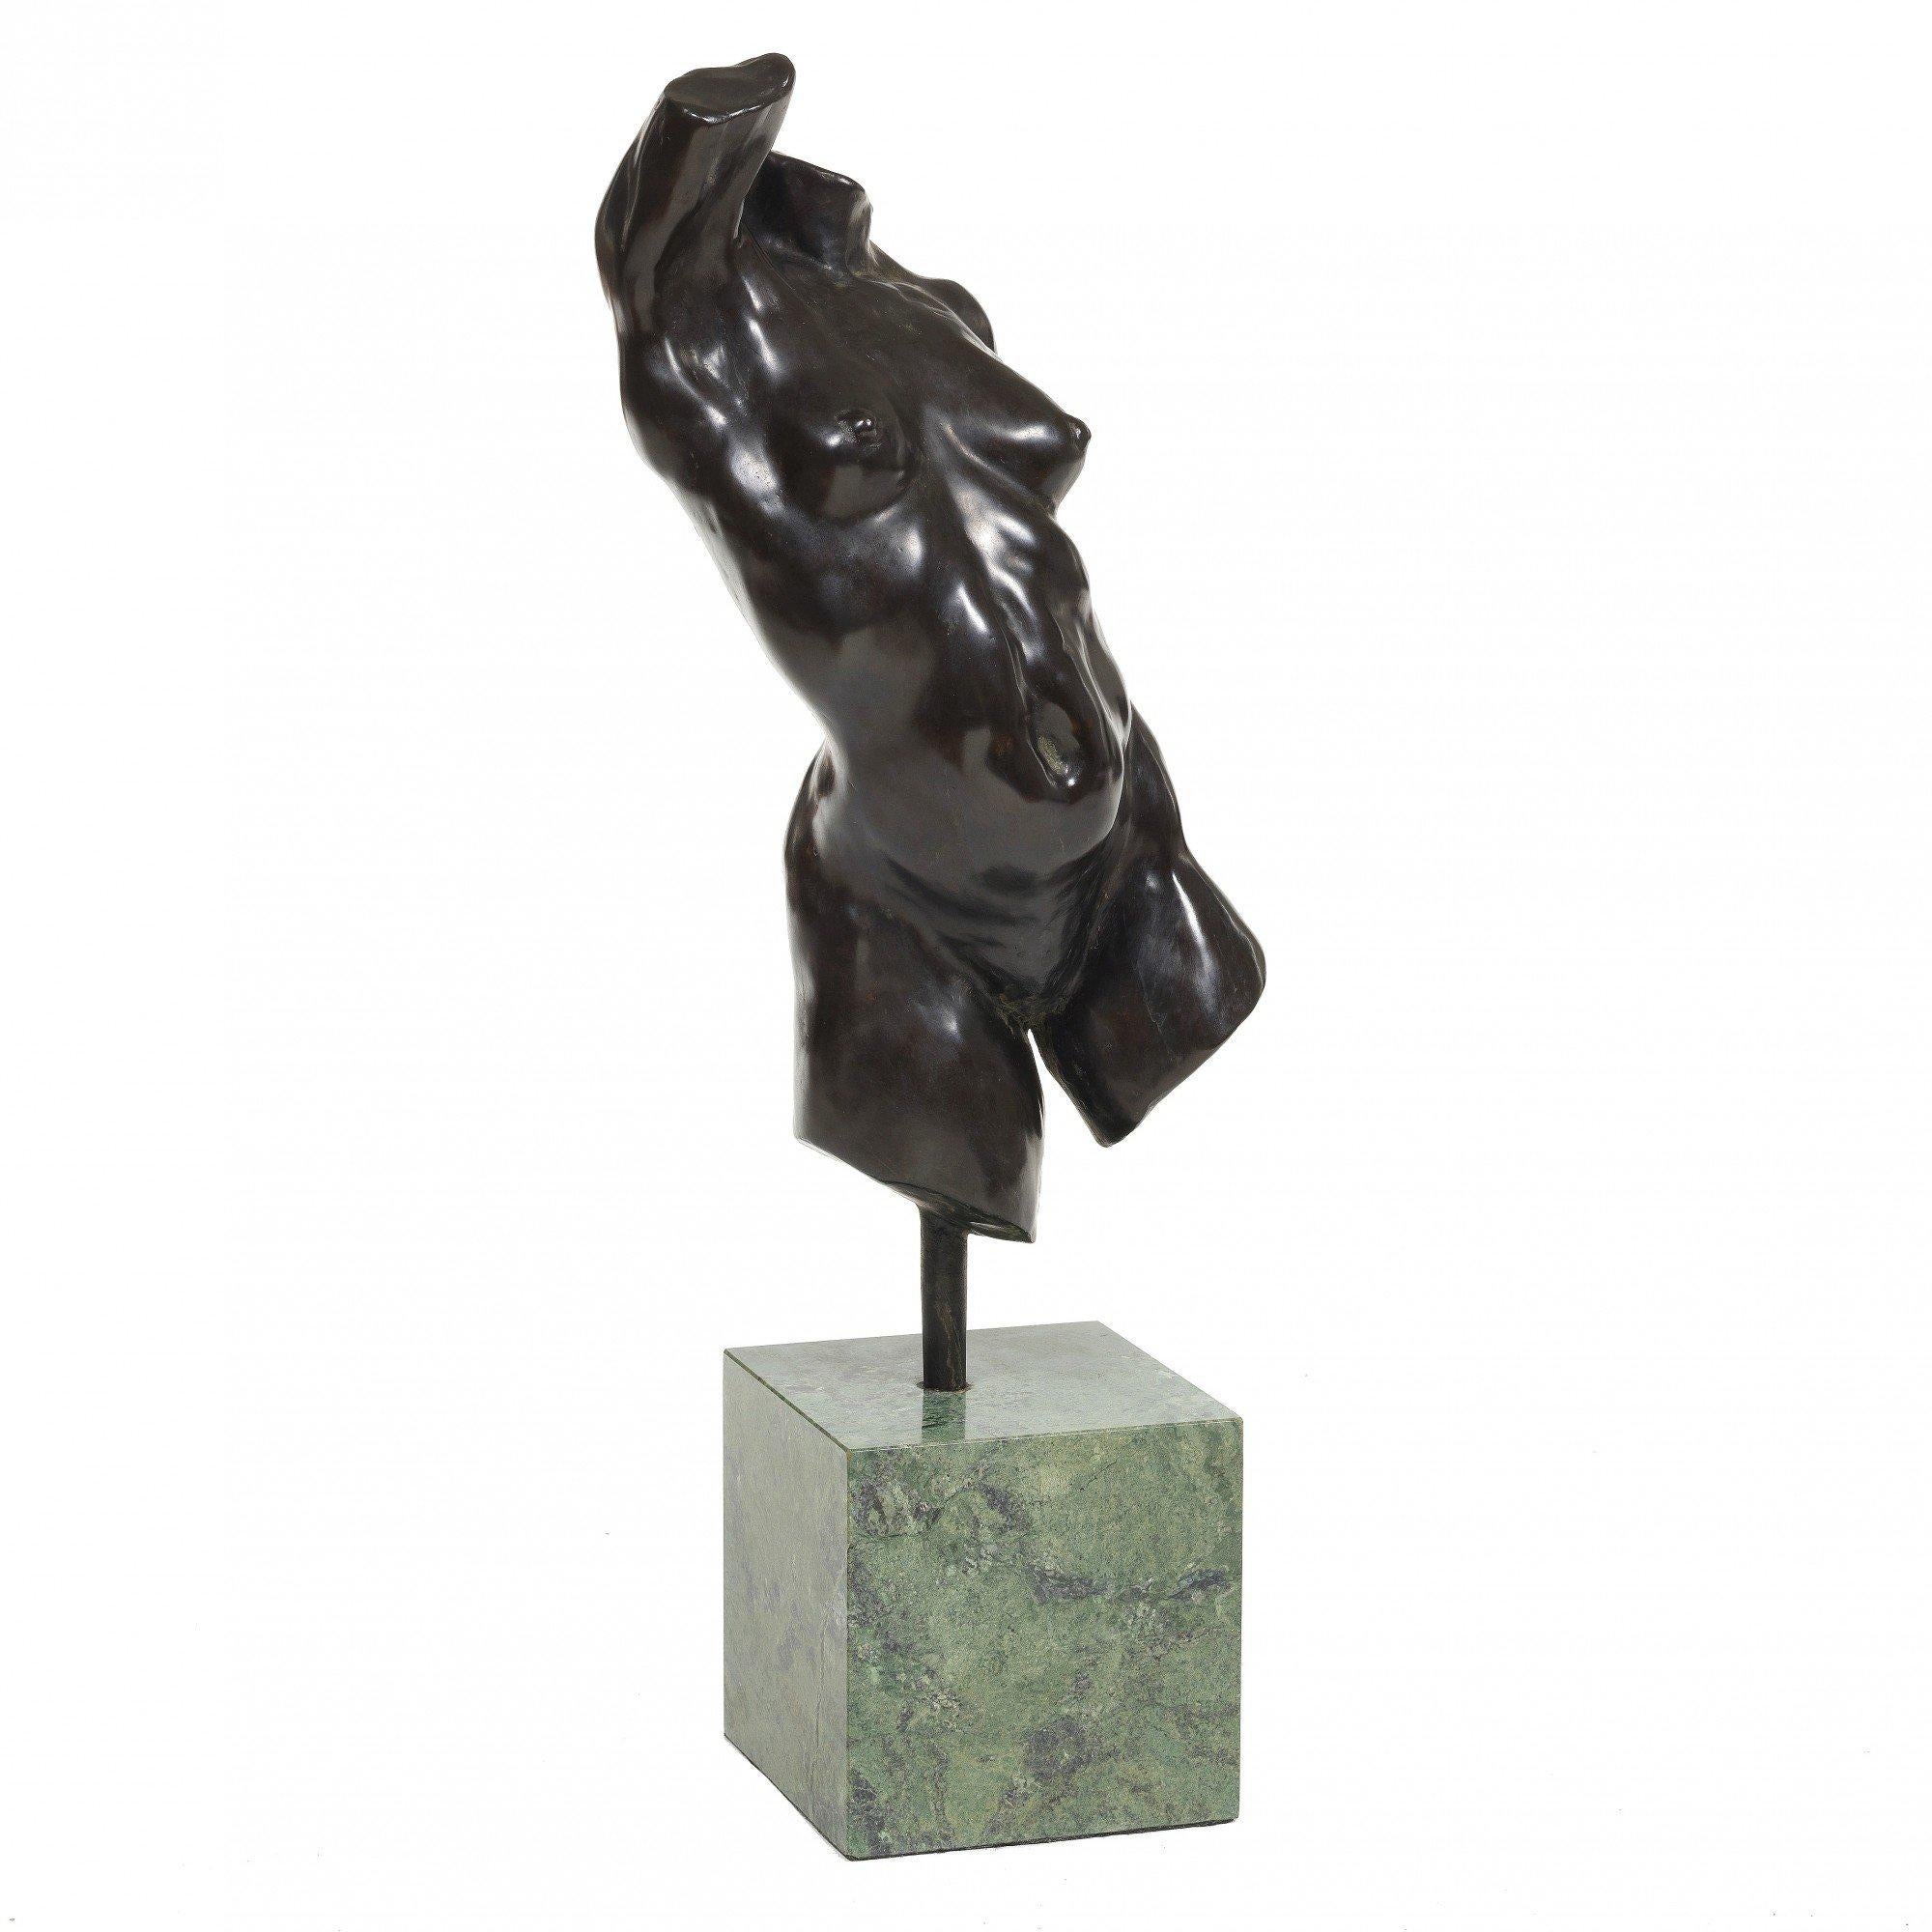 Nude Female Torso Bronze Sculpture, 20th Century Contemporary American Artist